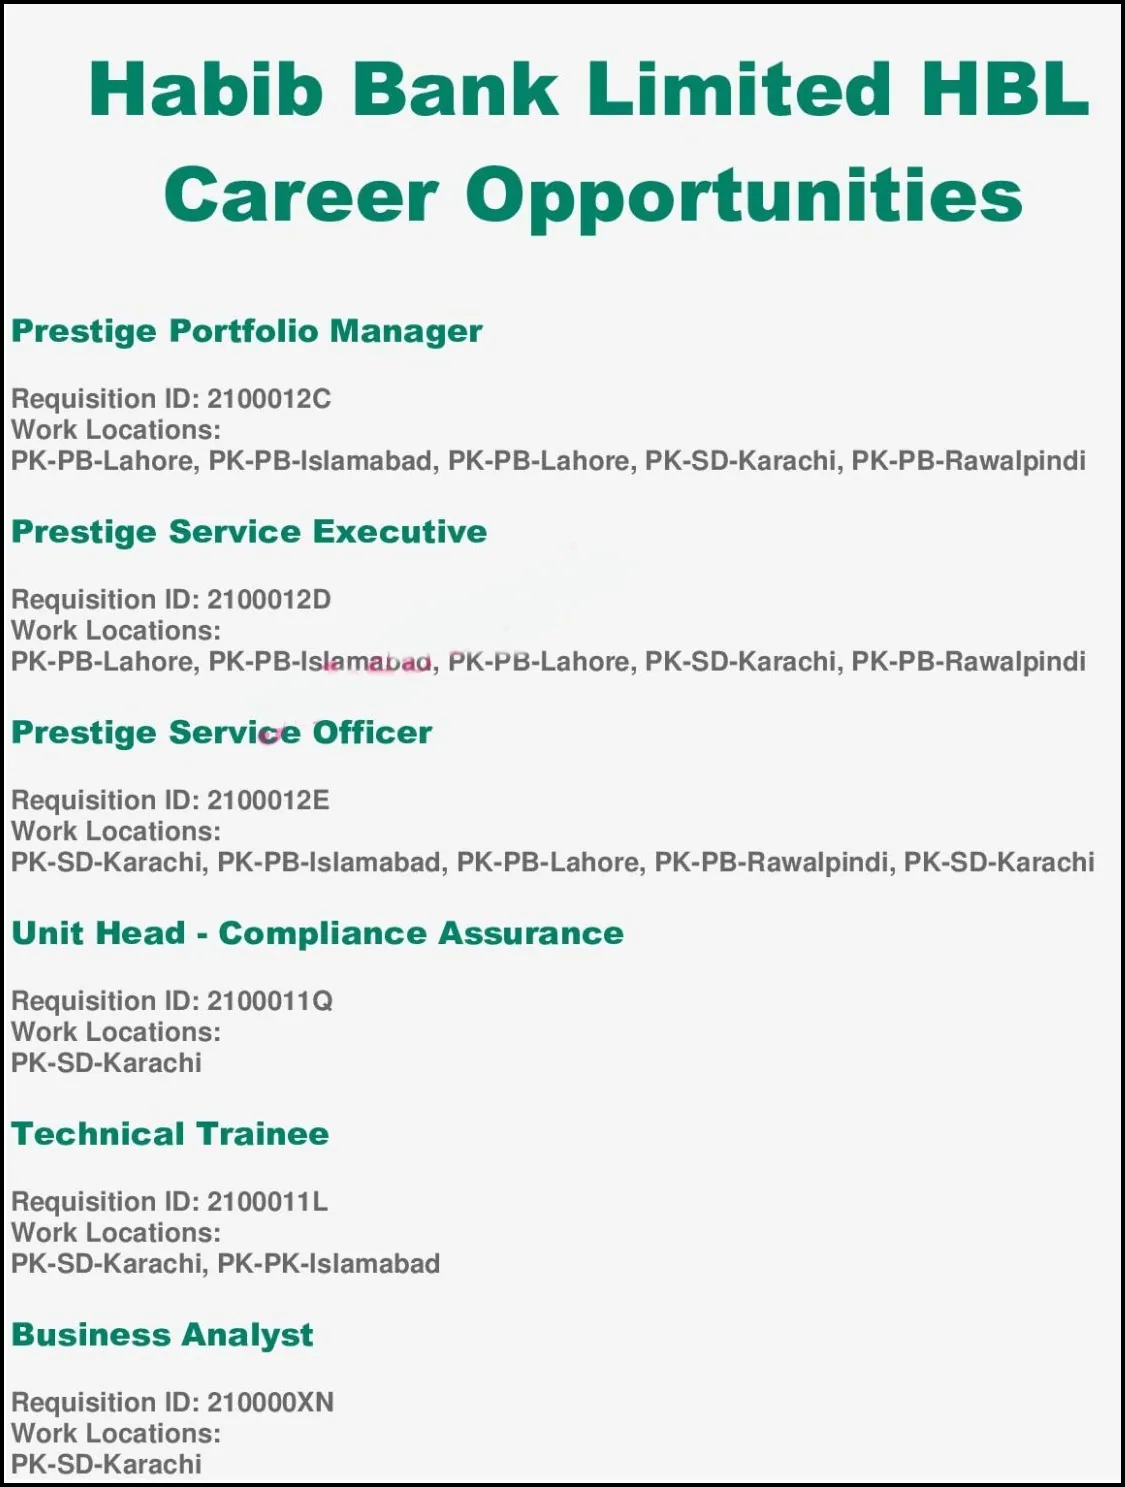 HBL Jobs 2023 - Apply Online Habib Bank Limited Careers